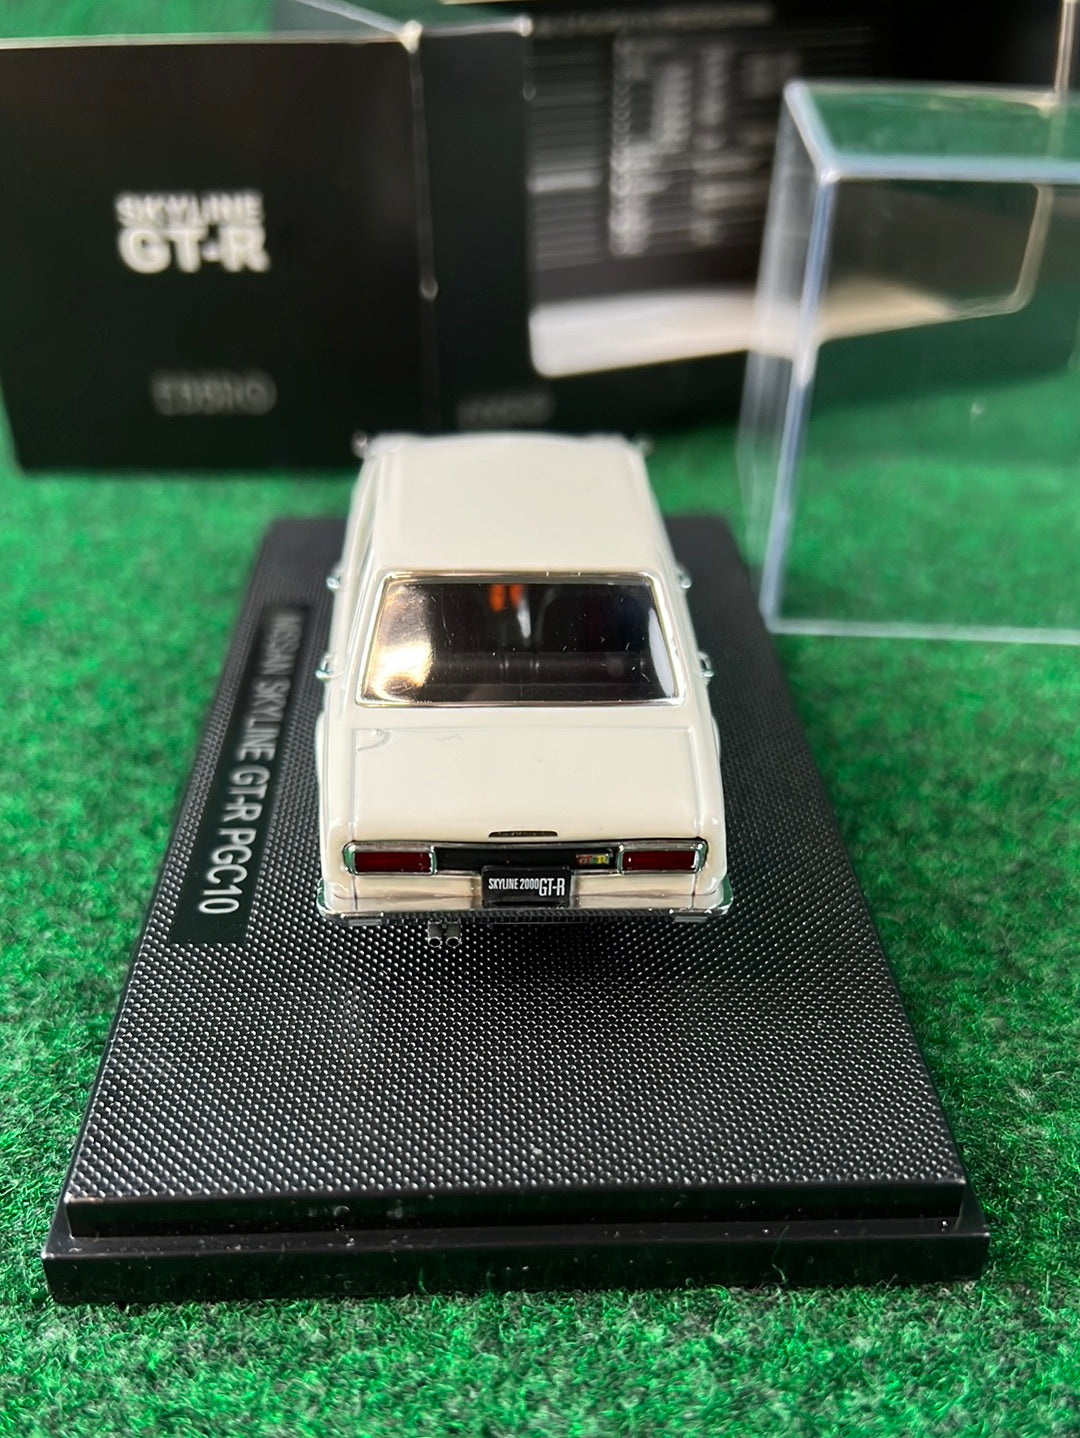 EBBRO Nissan Skyline GT-R PGC10 White 1/43 Scale Diecast